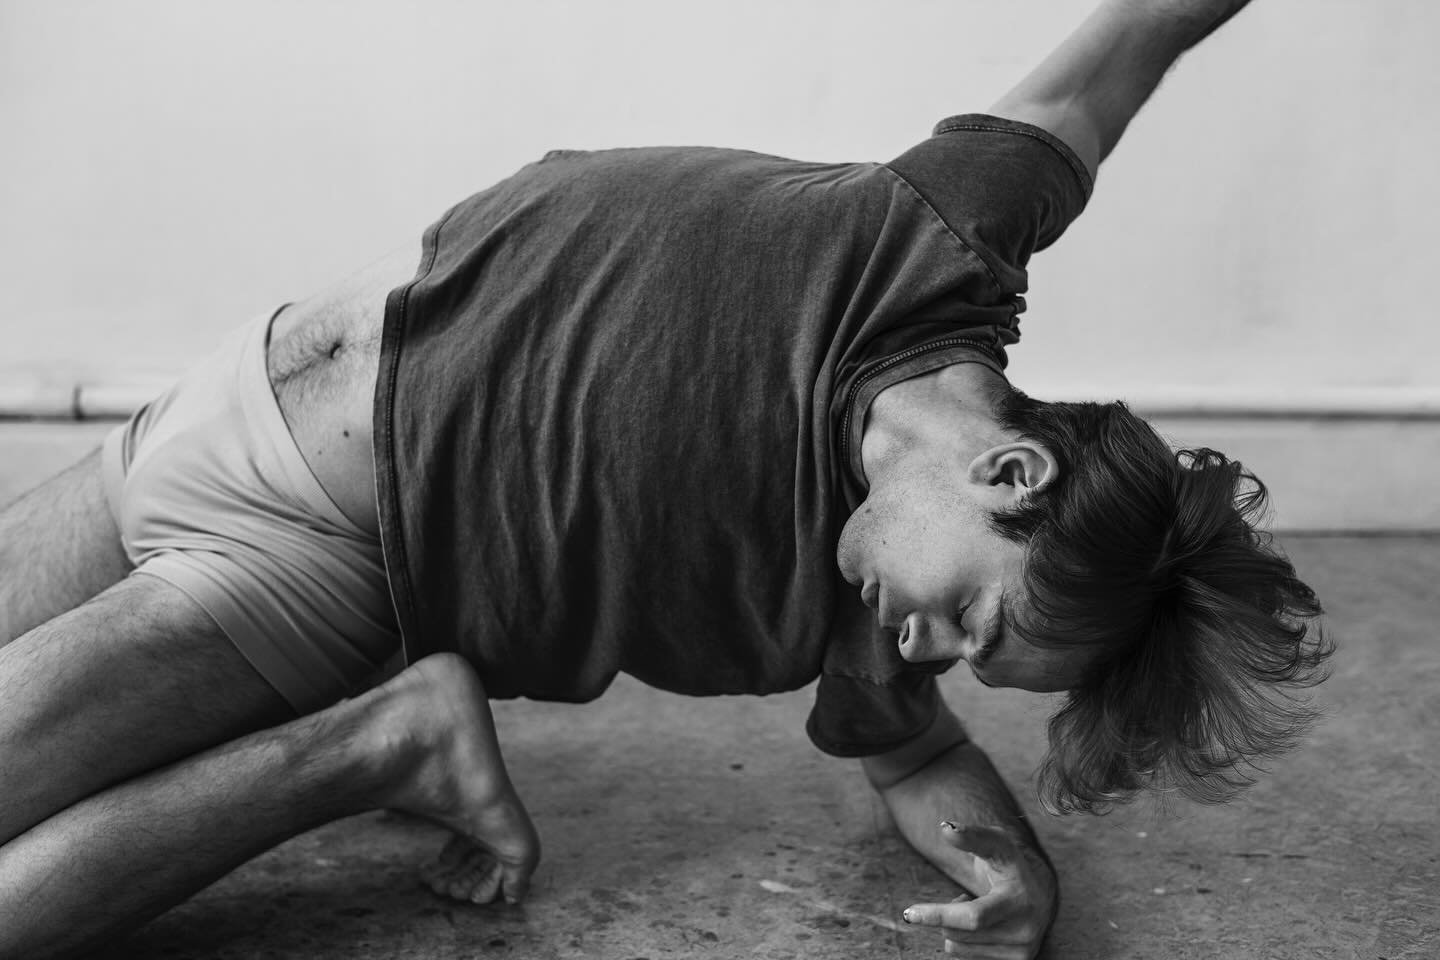 Kiran

#poeticbody #dancers #bnwphotography #bnwmood #innermovement #bodylanguage #movementlanguage #dutchphotographer 
@kiran______gzls